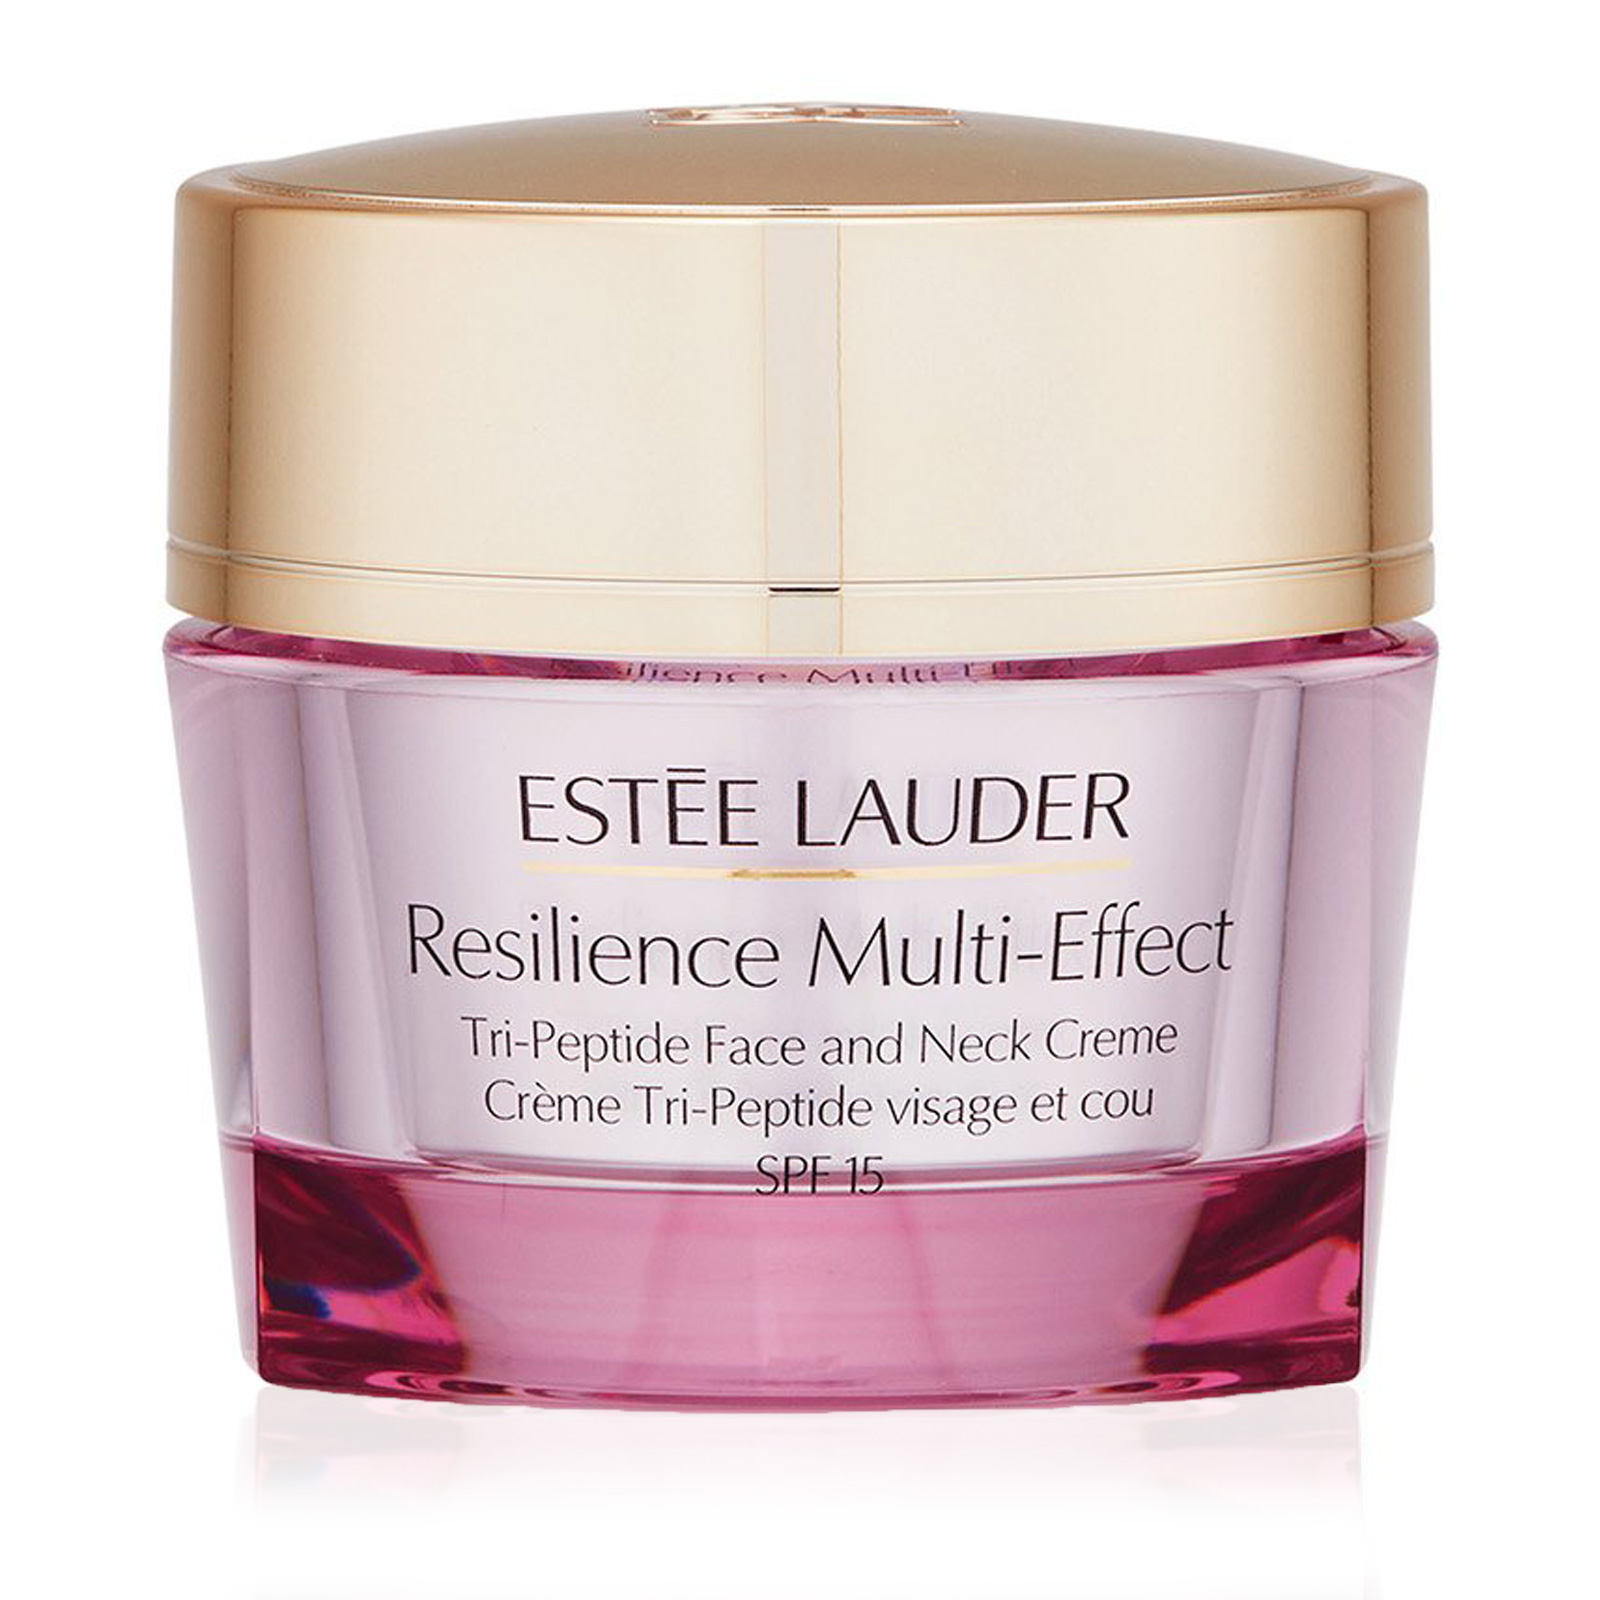 Estée Lauder Resilience Multi-Effect Tri-Peptide Face and Neck Creme SPF 15  (Dry Skin)50 ml 1.7 oz AKB Beauty